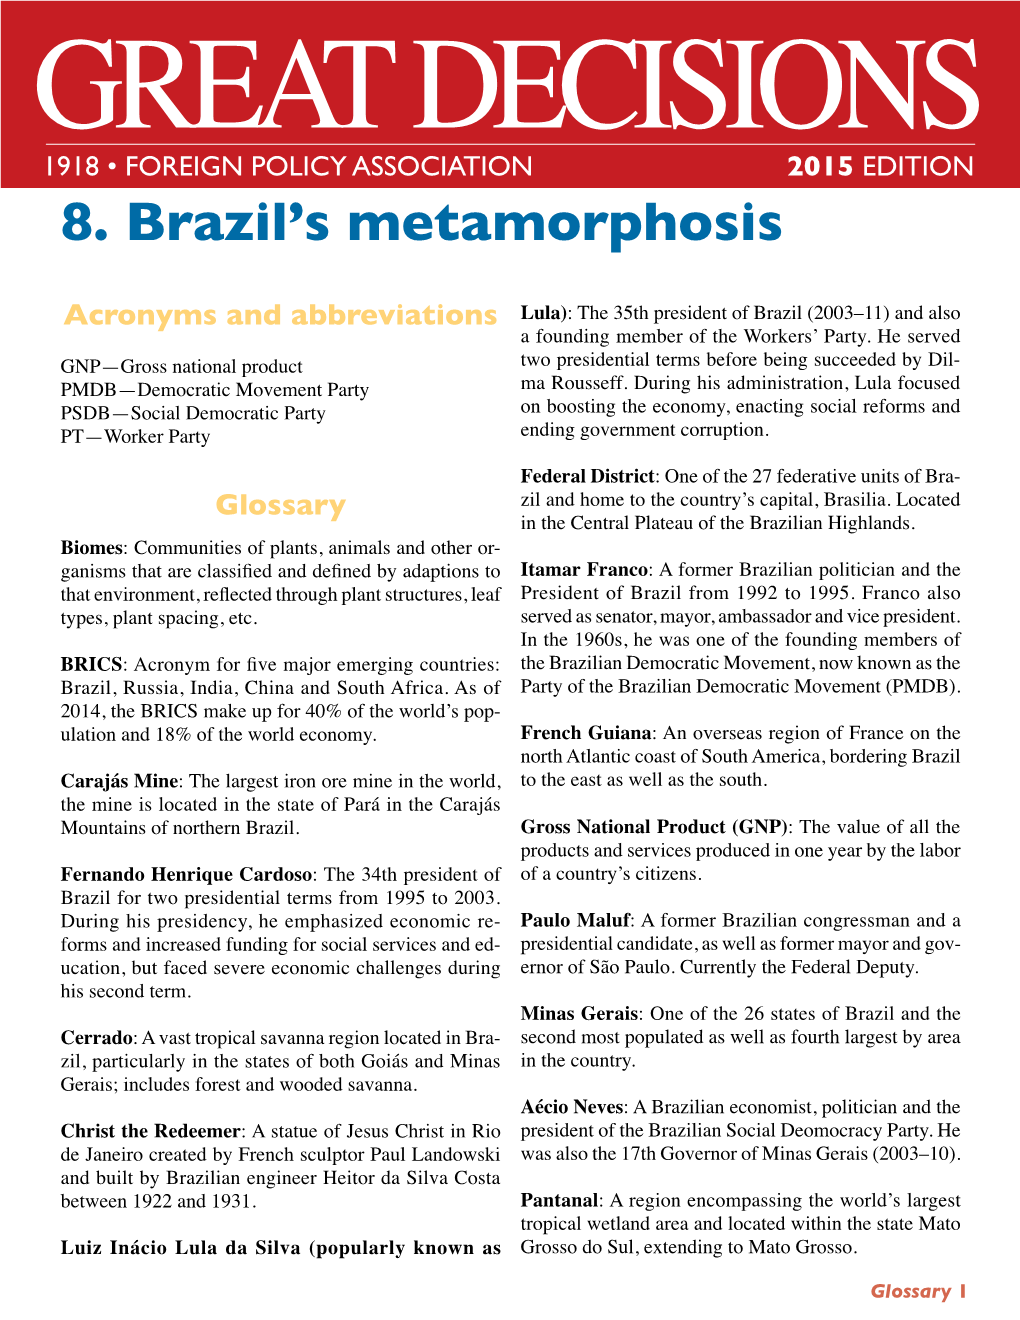 8. Brazil's Metamorphosis